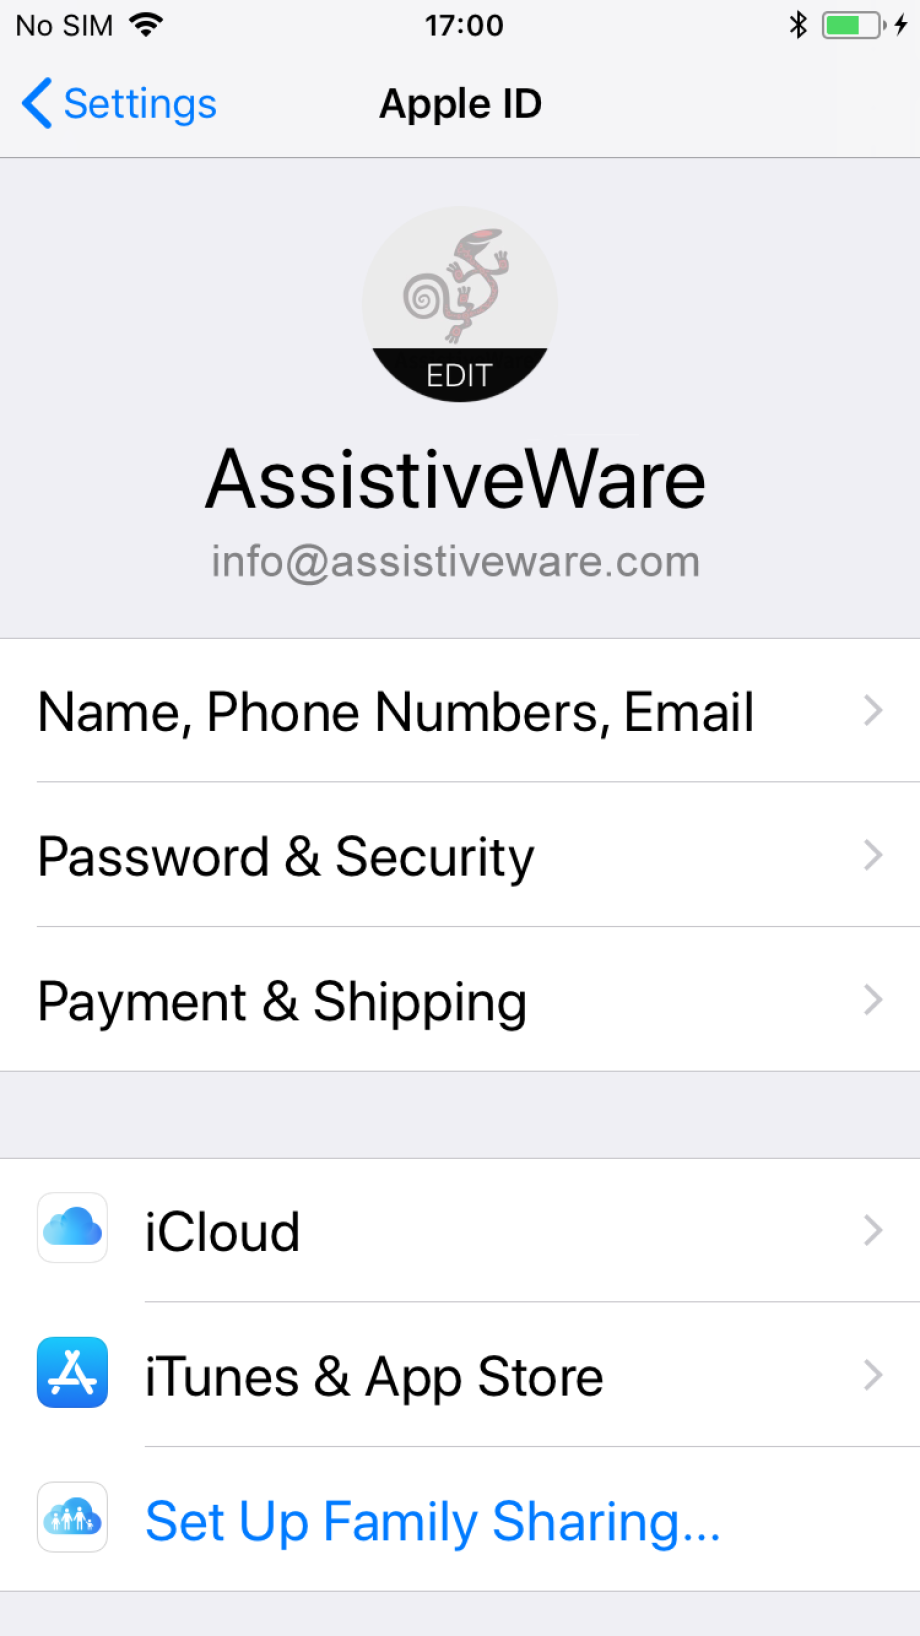 Apple ID settings in the Settings app